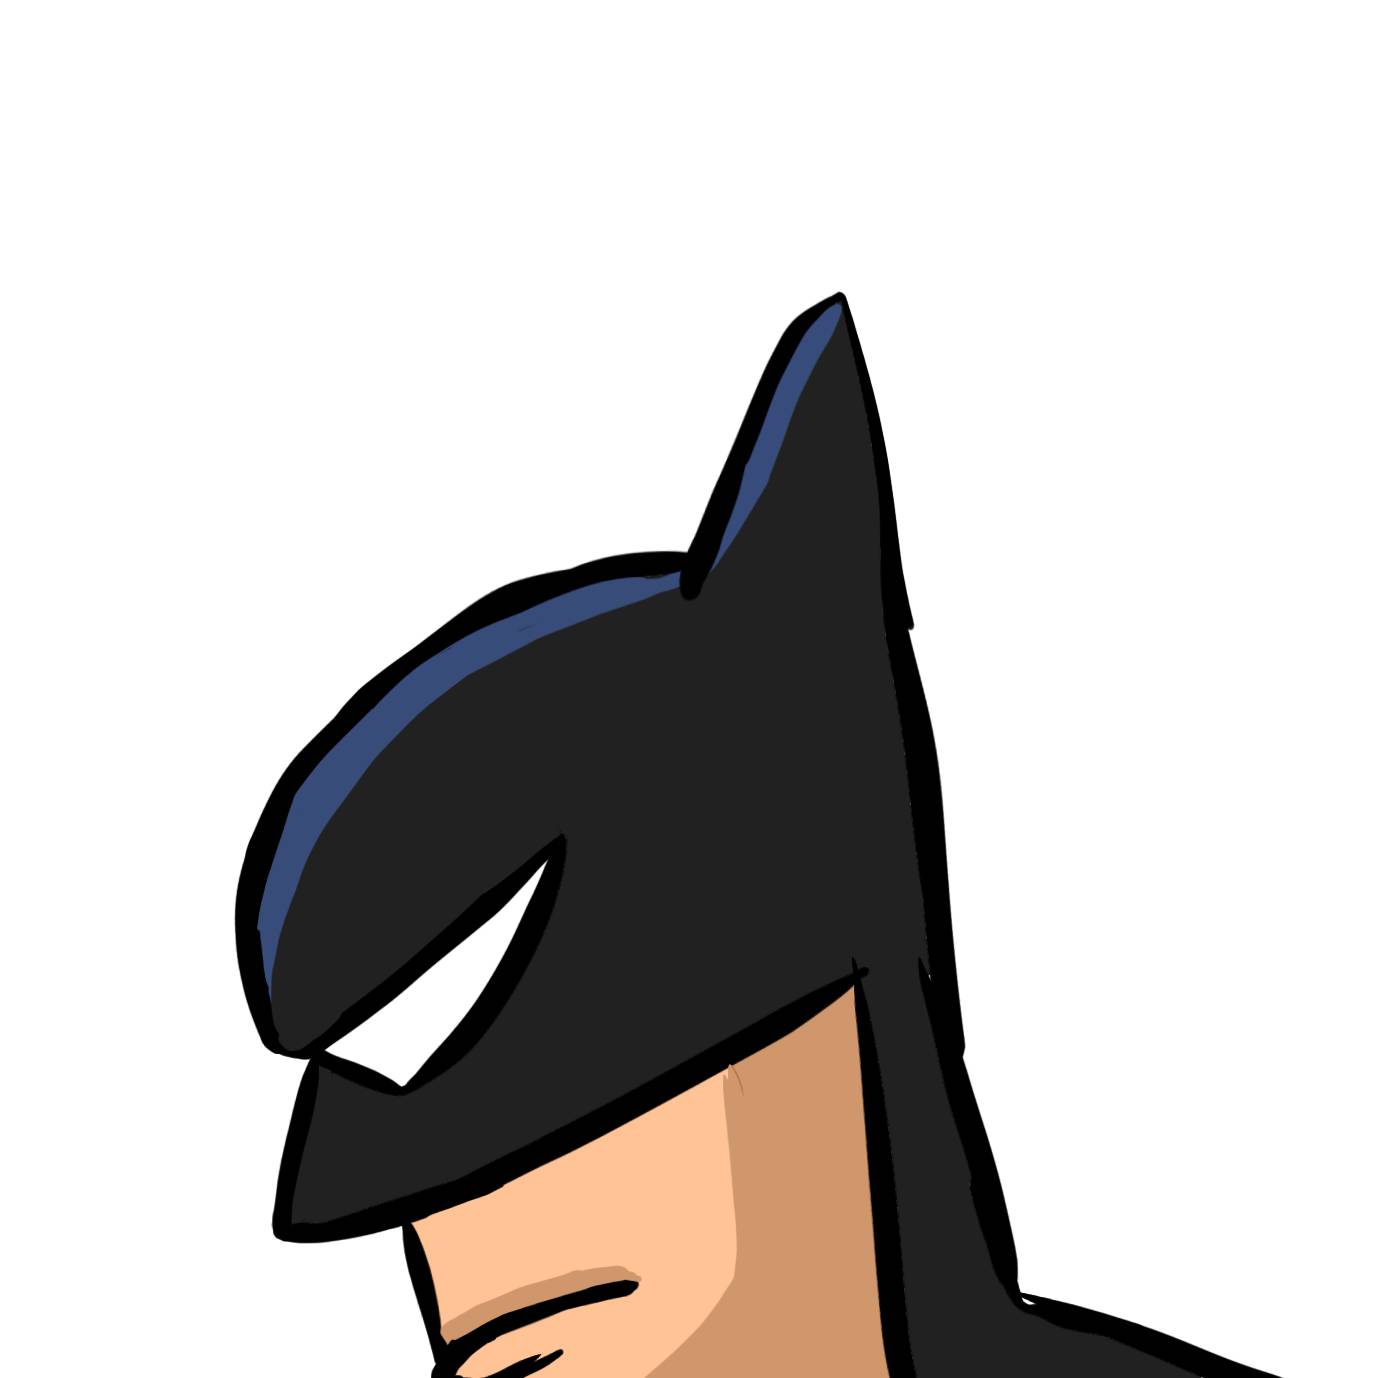 BR) Batman a Serie Animada by BlueWind2022 on DeviantArt